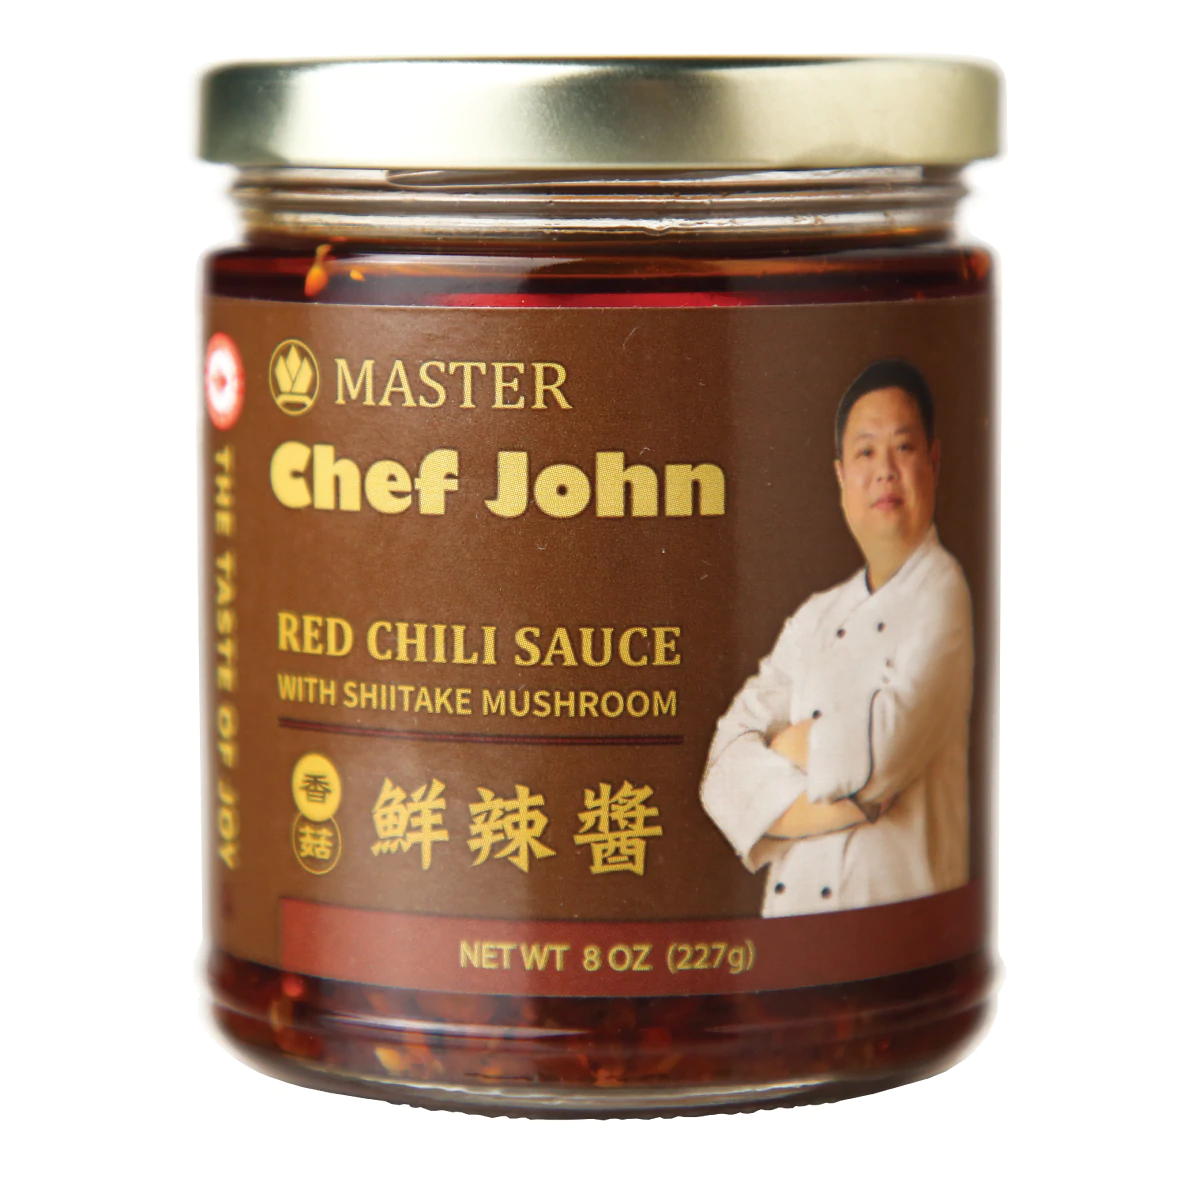 ✅ Master Chef John Red Chili Sauce  With Shiitake Mushroom 8oz 227g